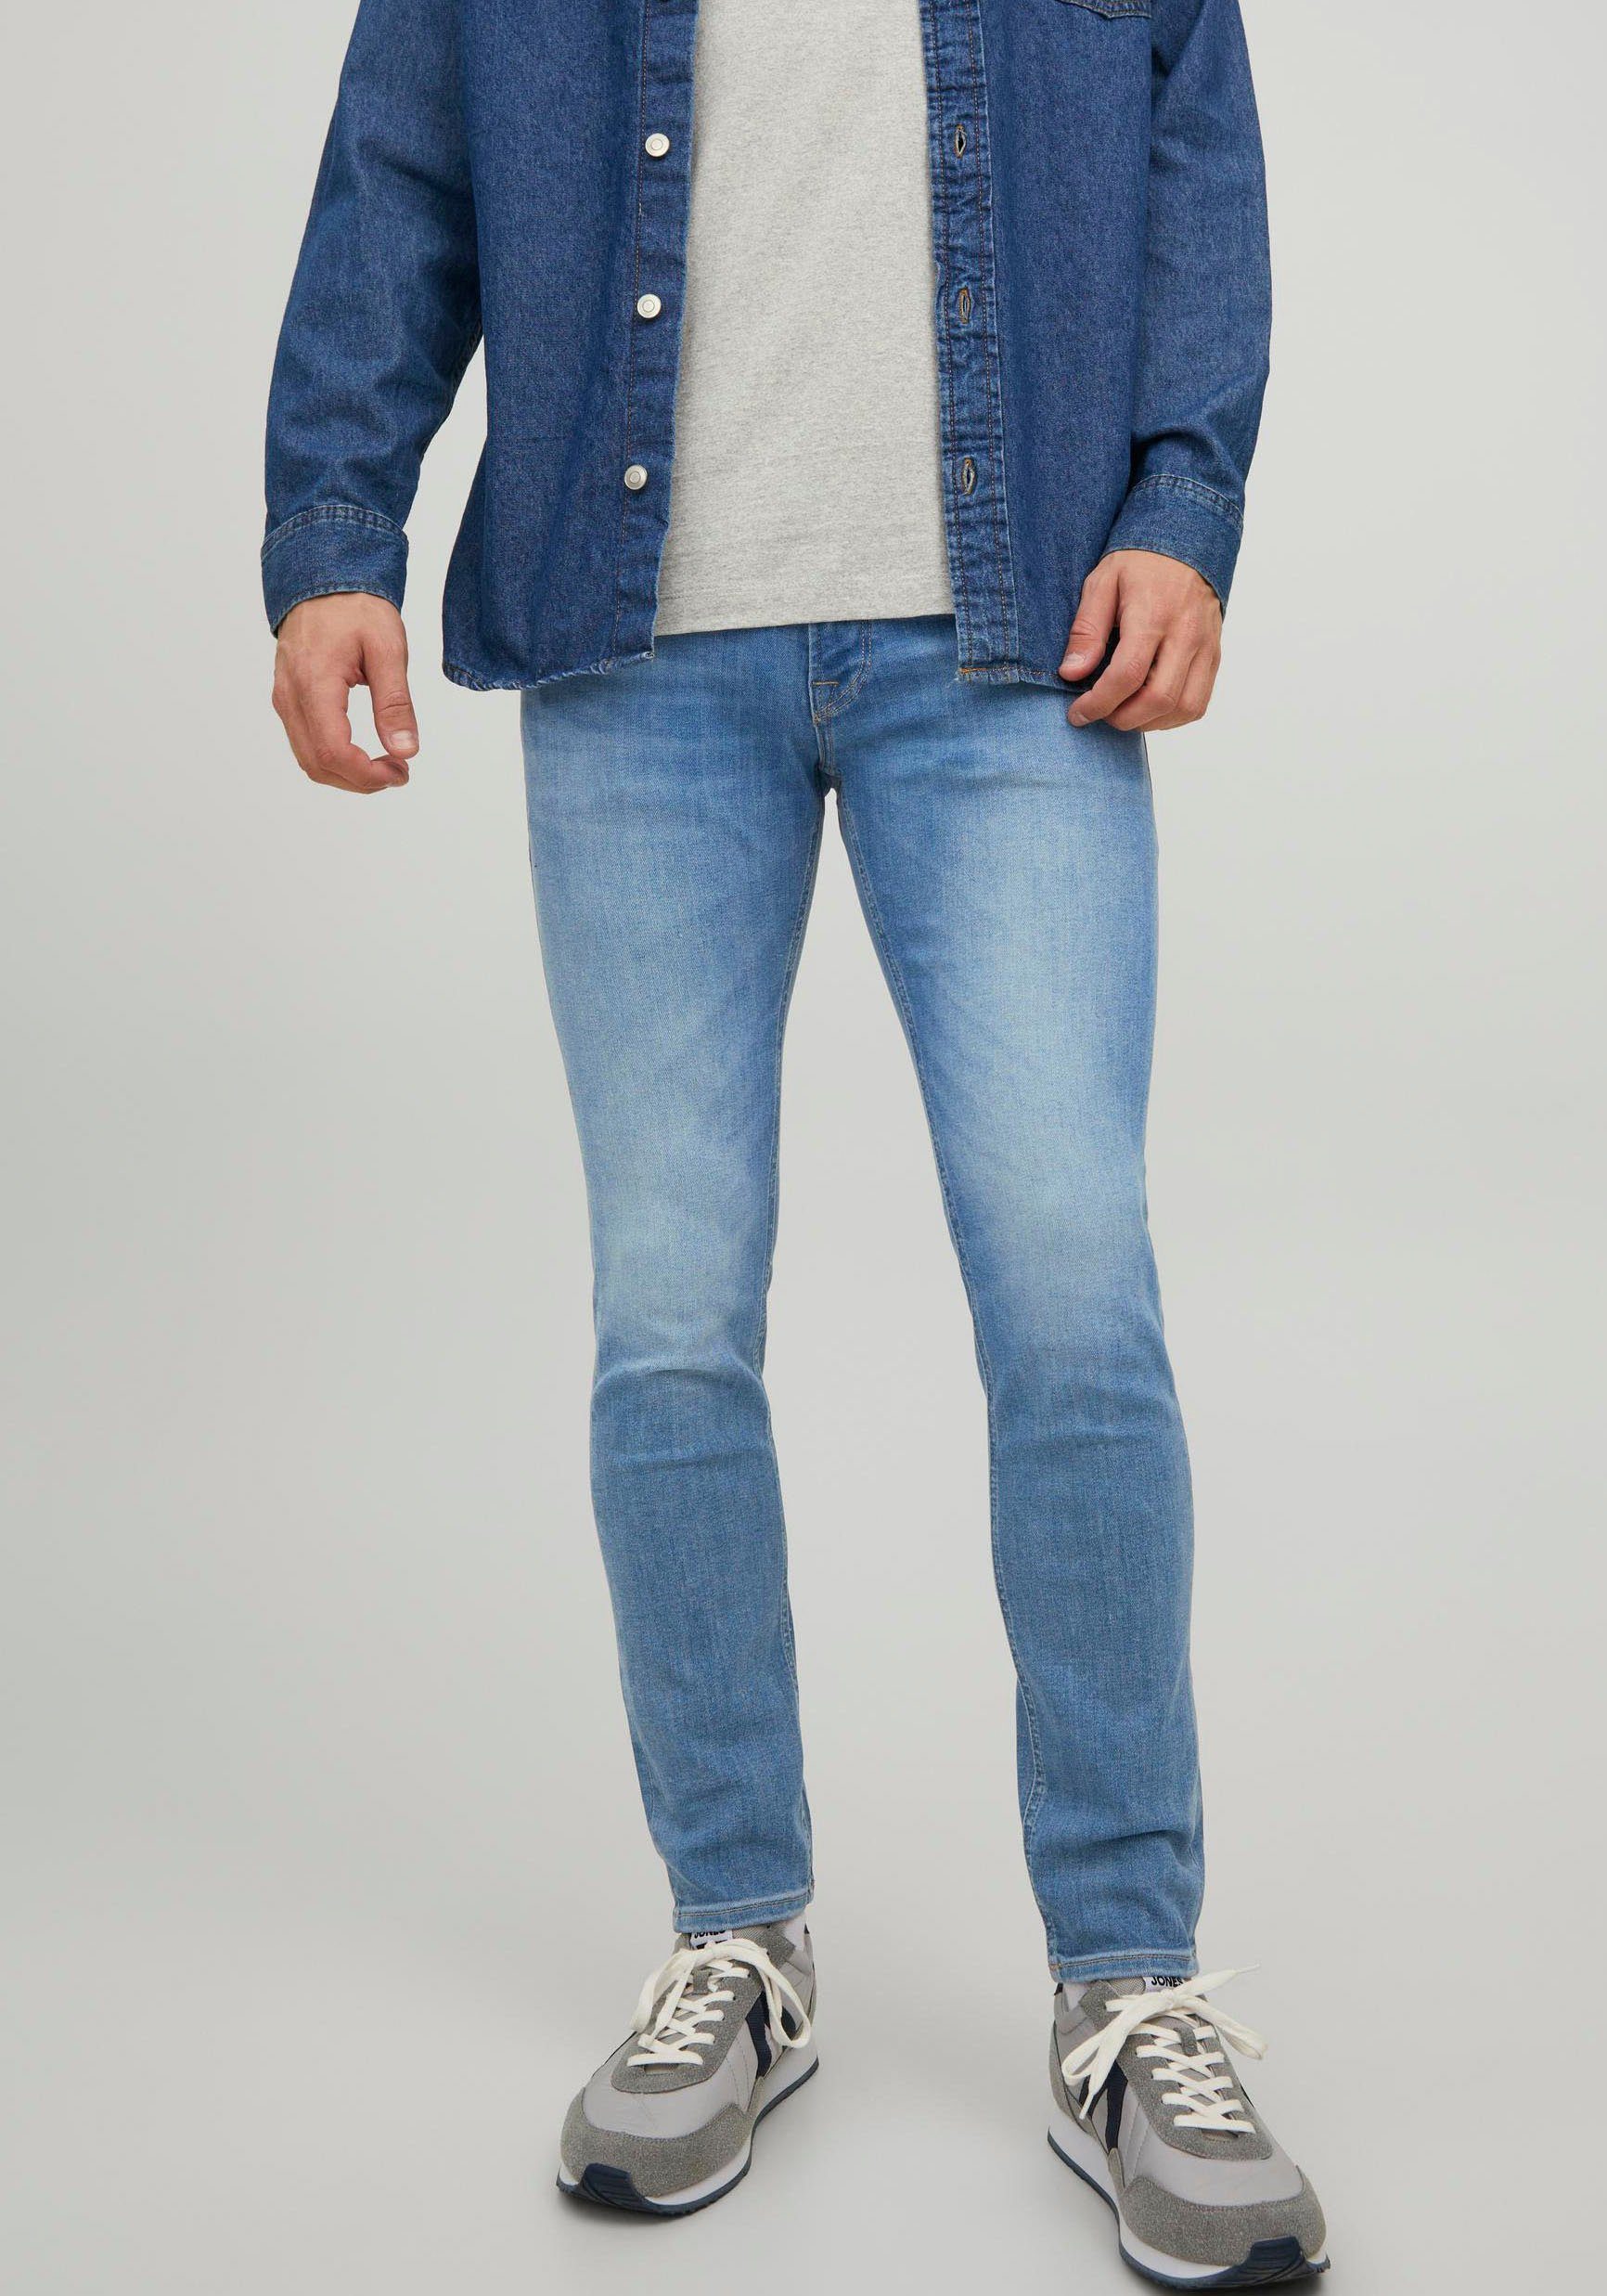 Günstiger Neuartikel Jack & JJORIGINAL Skinny-fit-Jeans light-blue-denim JJILIAM GE 314 Jones